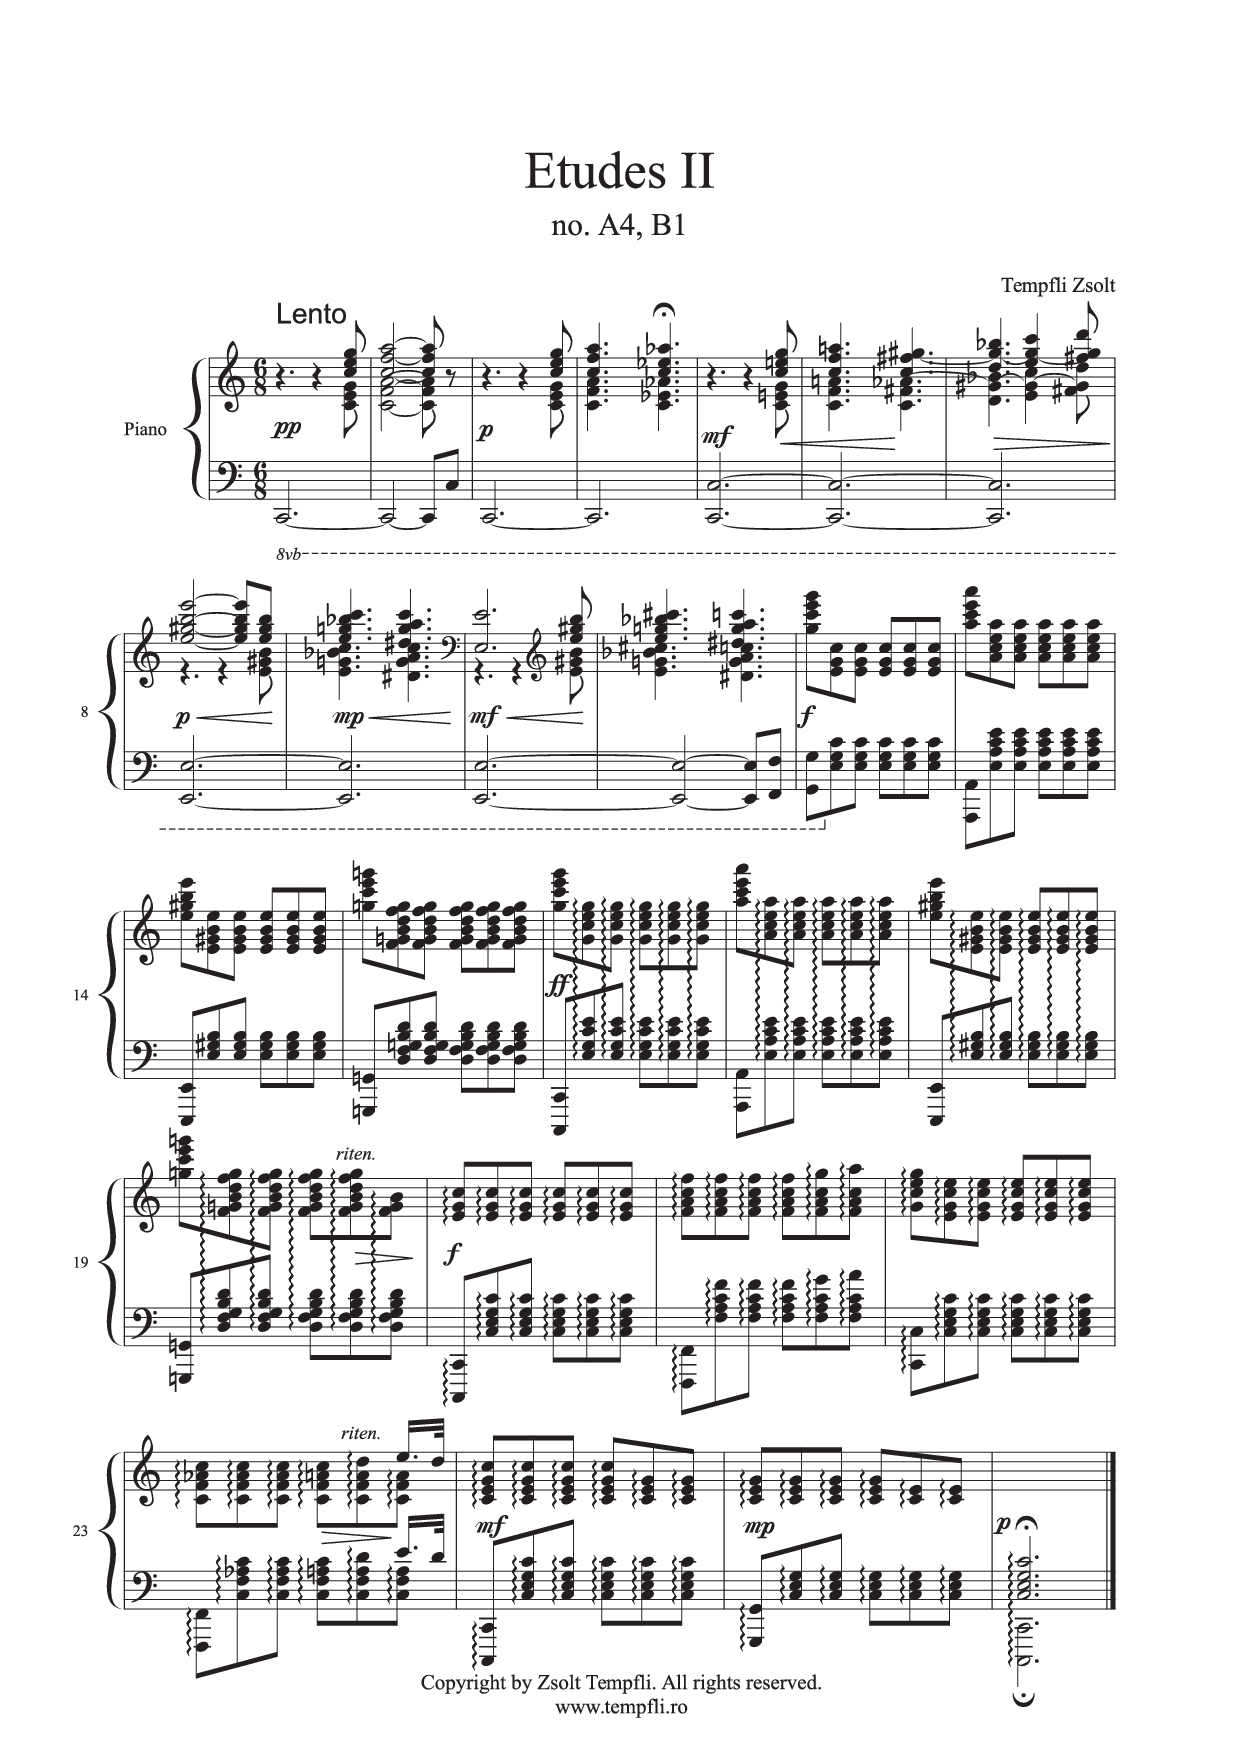 Zsolt Tempfli: Etudes II no. A4 or B1 for piano